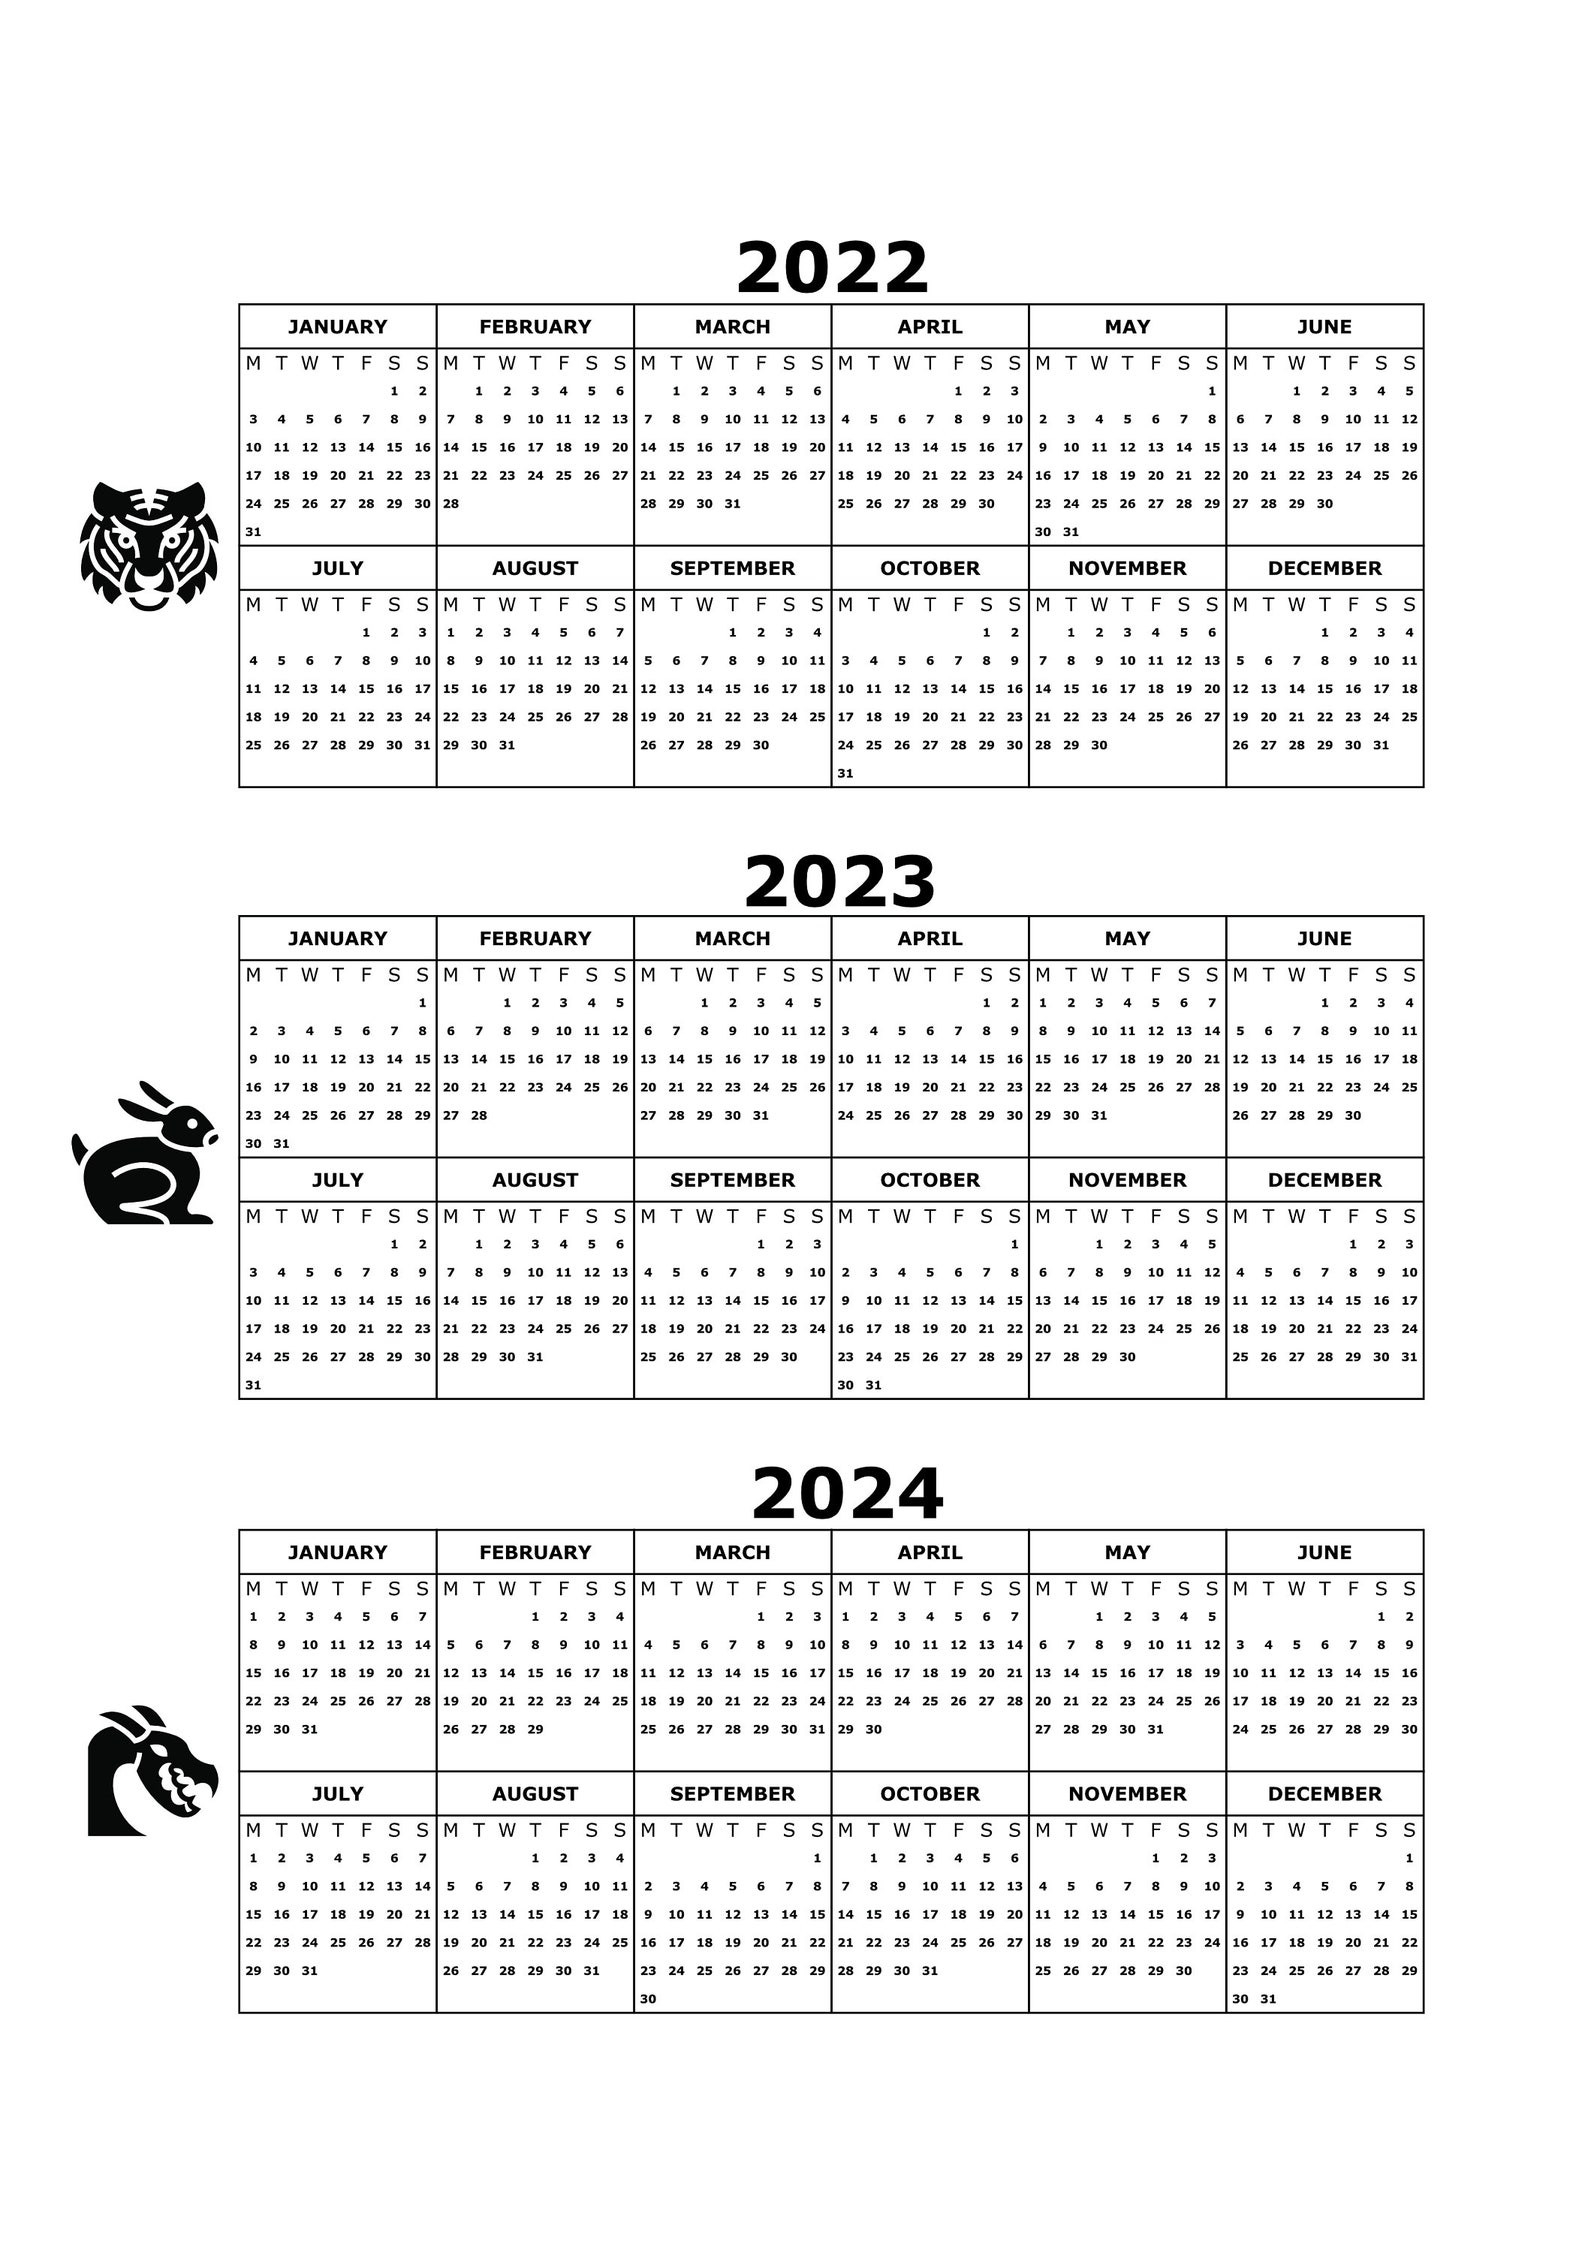 Mini Calendar 2022 Printable A5 Includes 2022 2023 2024 | Etsy  2022 Calendar Printable A5